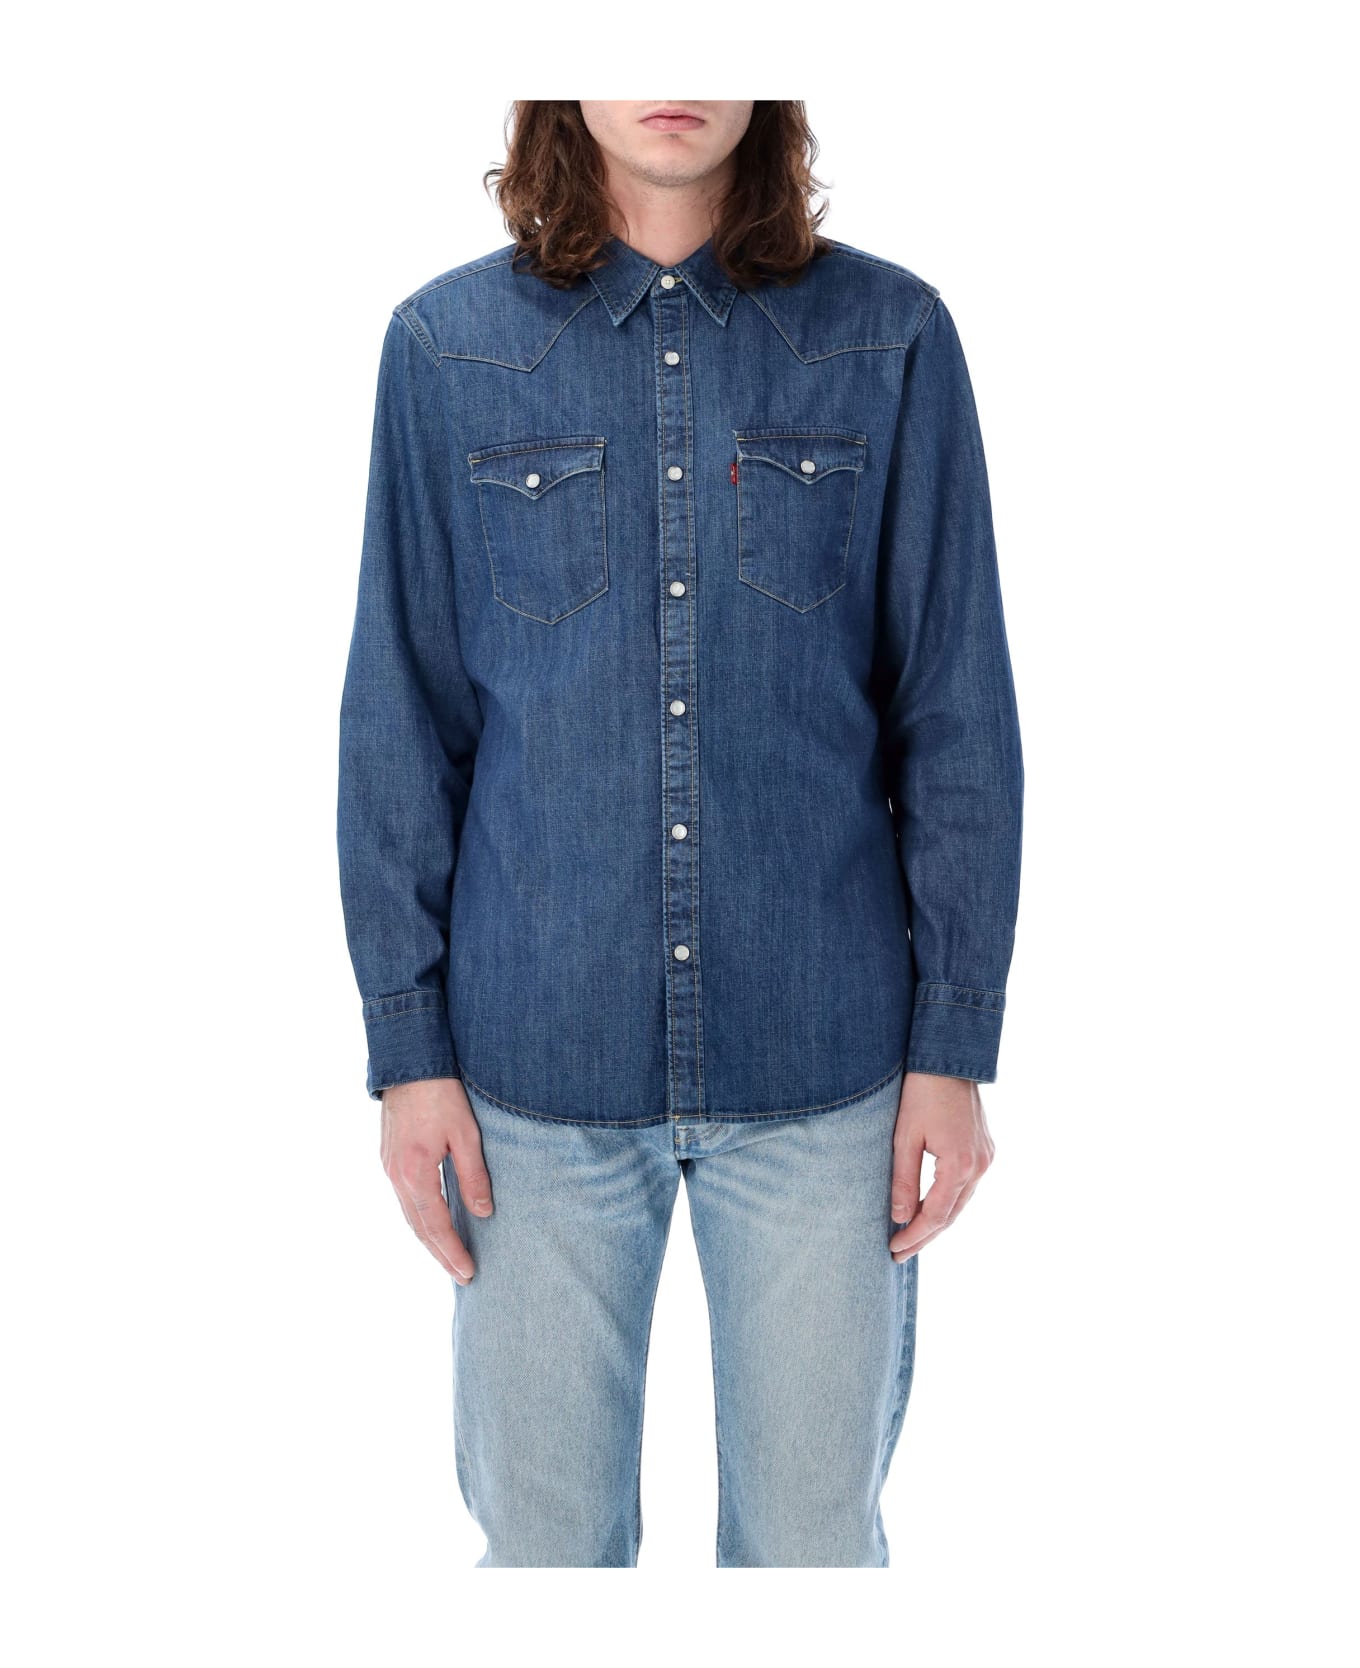 Levi's Barstow Western Shirt - DK BLUE